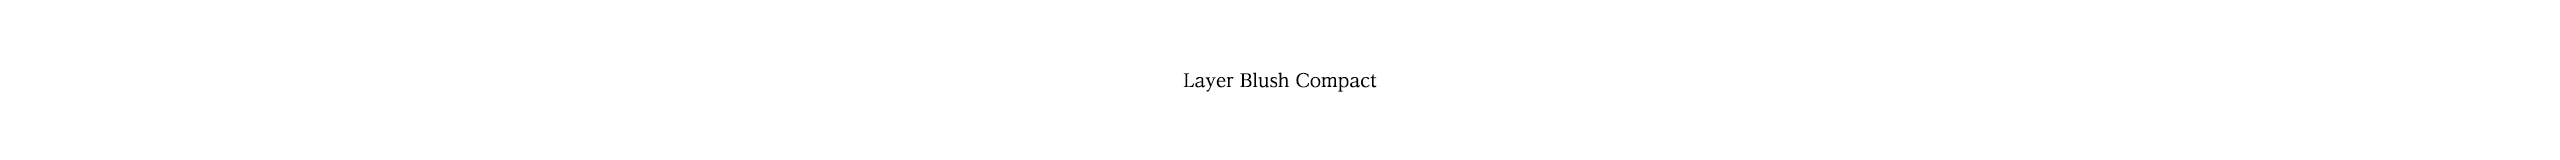 Layer Blush Compact